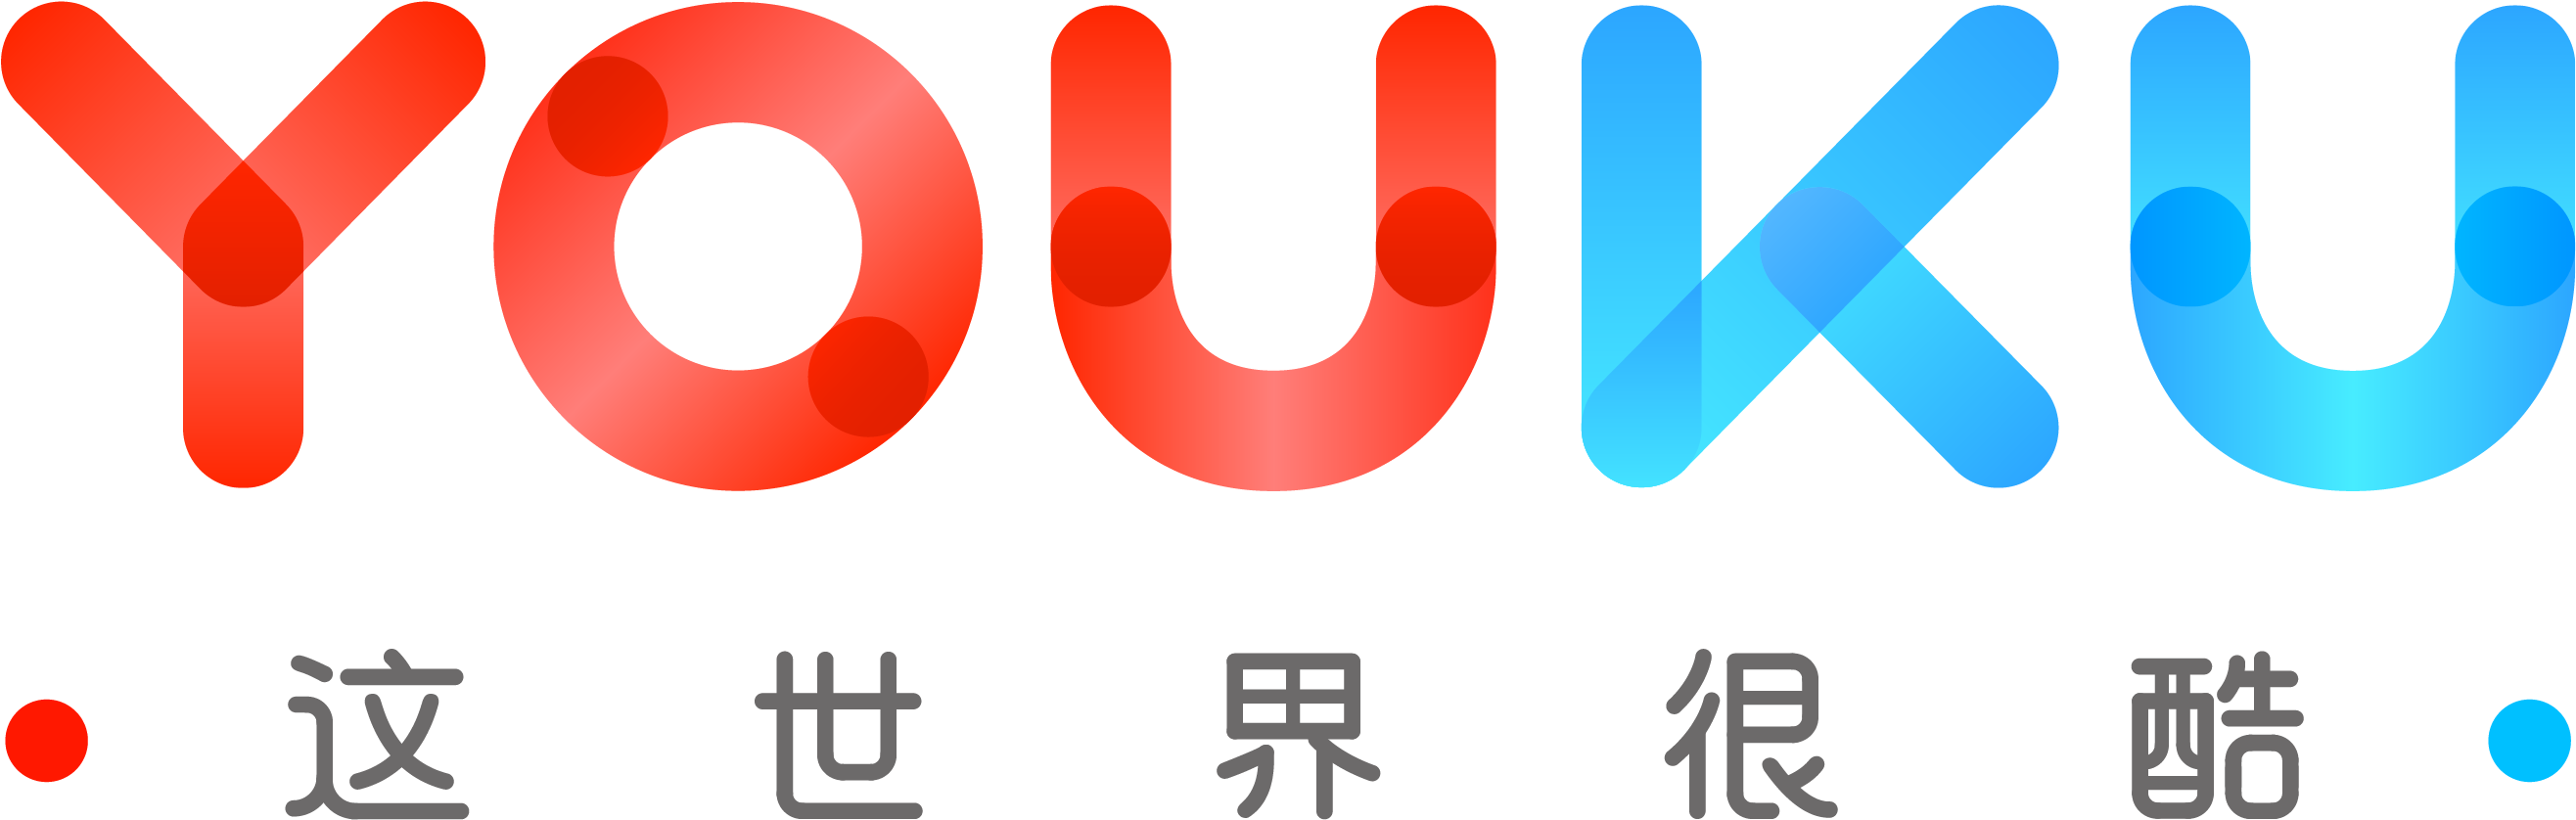 Youku Png Youku Logo Clipart Large Size Png Image Pikpng